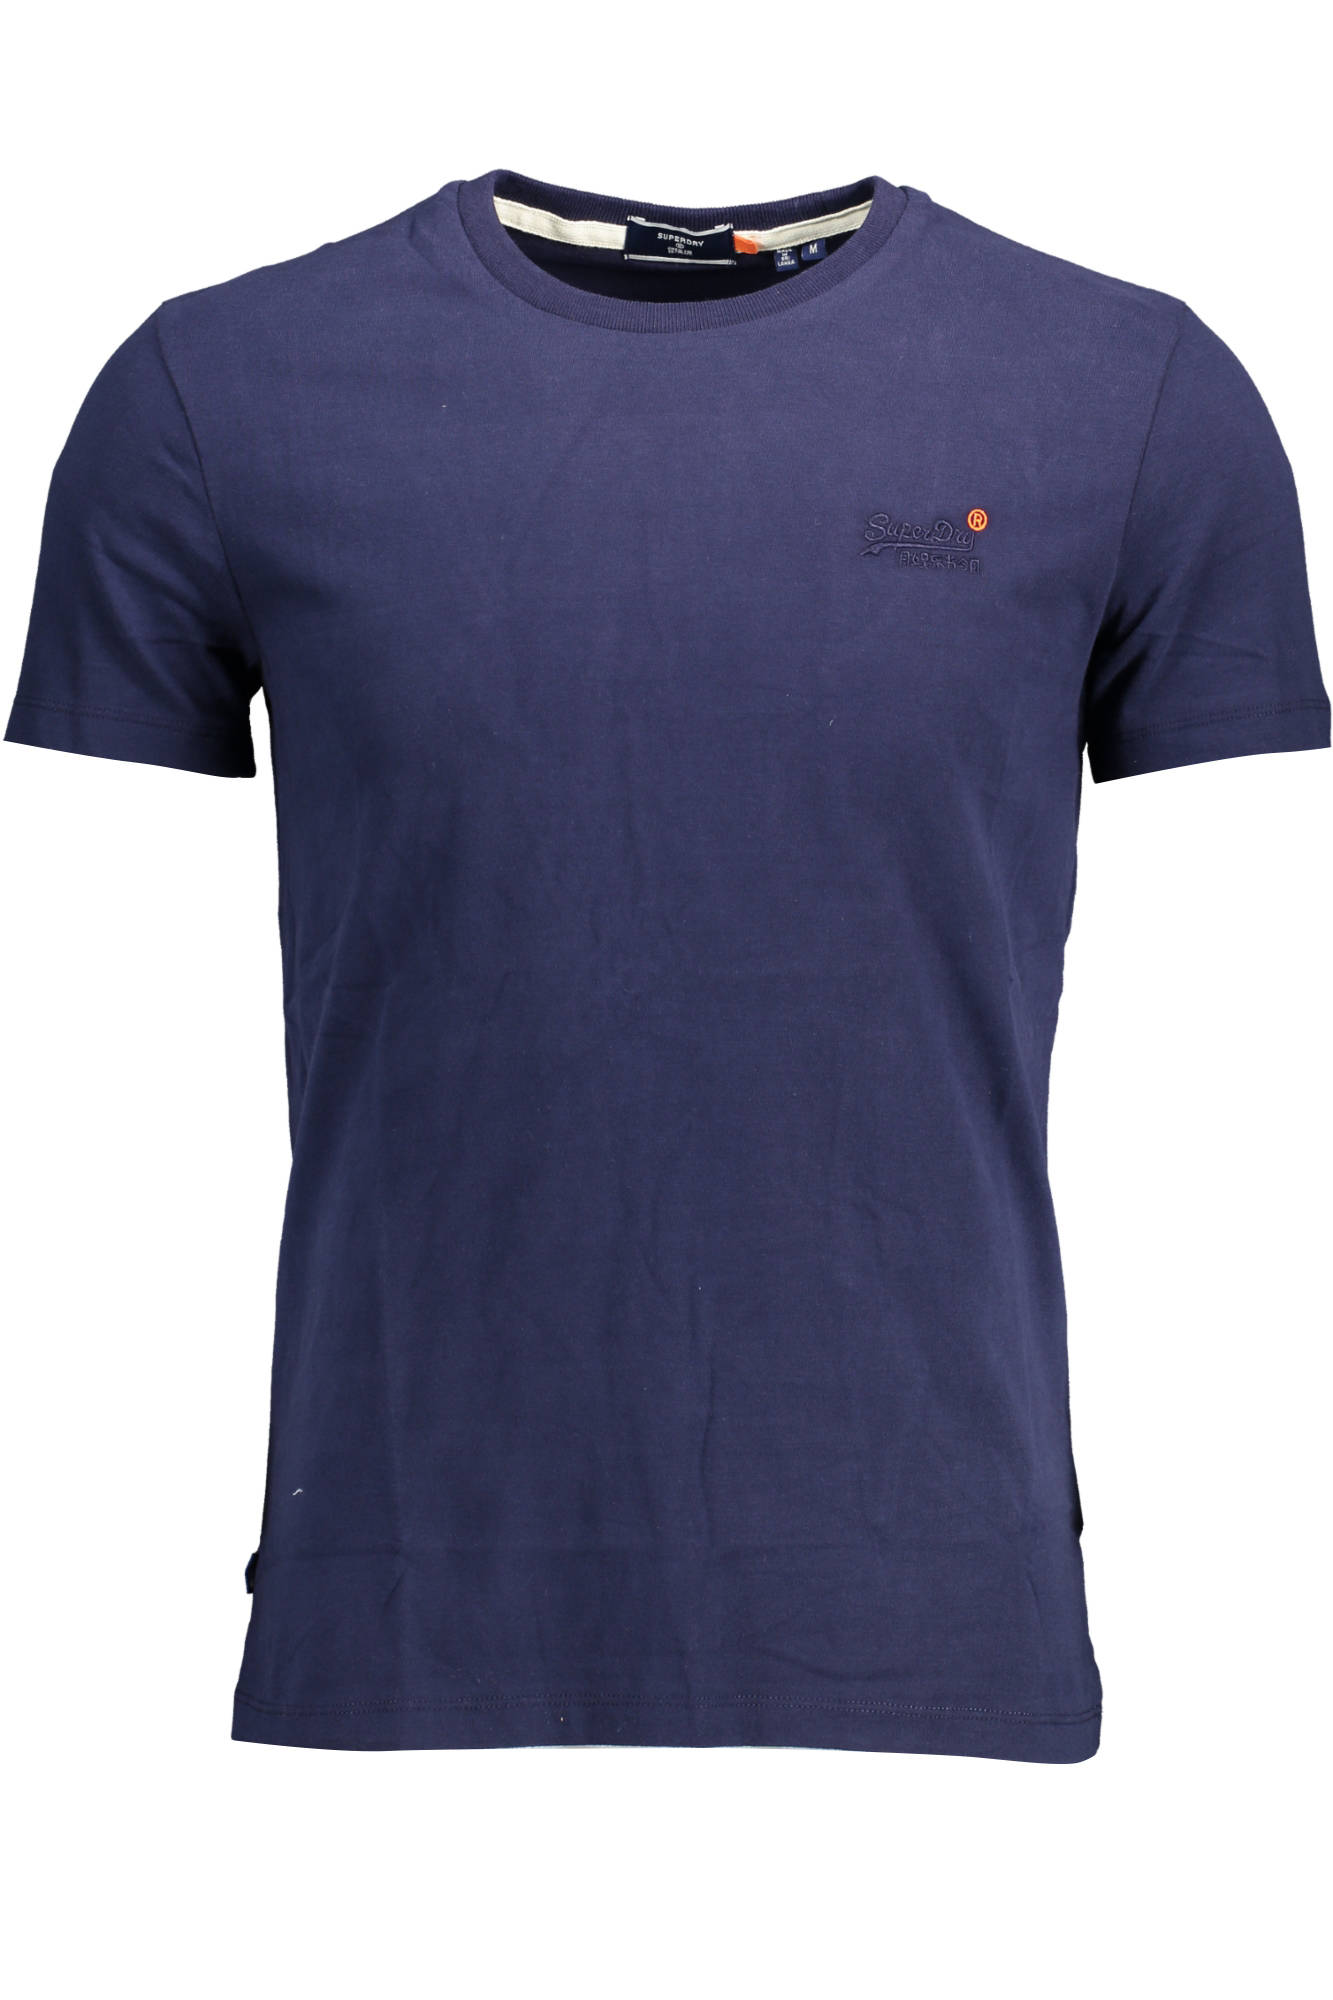 Tričko SUPERDRY tričko s krátkým rukávem BLU